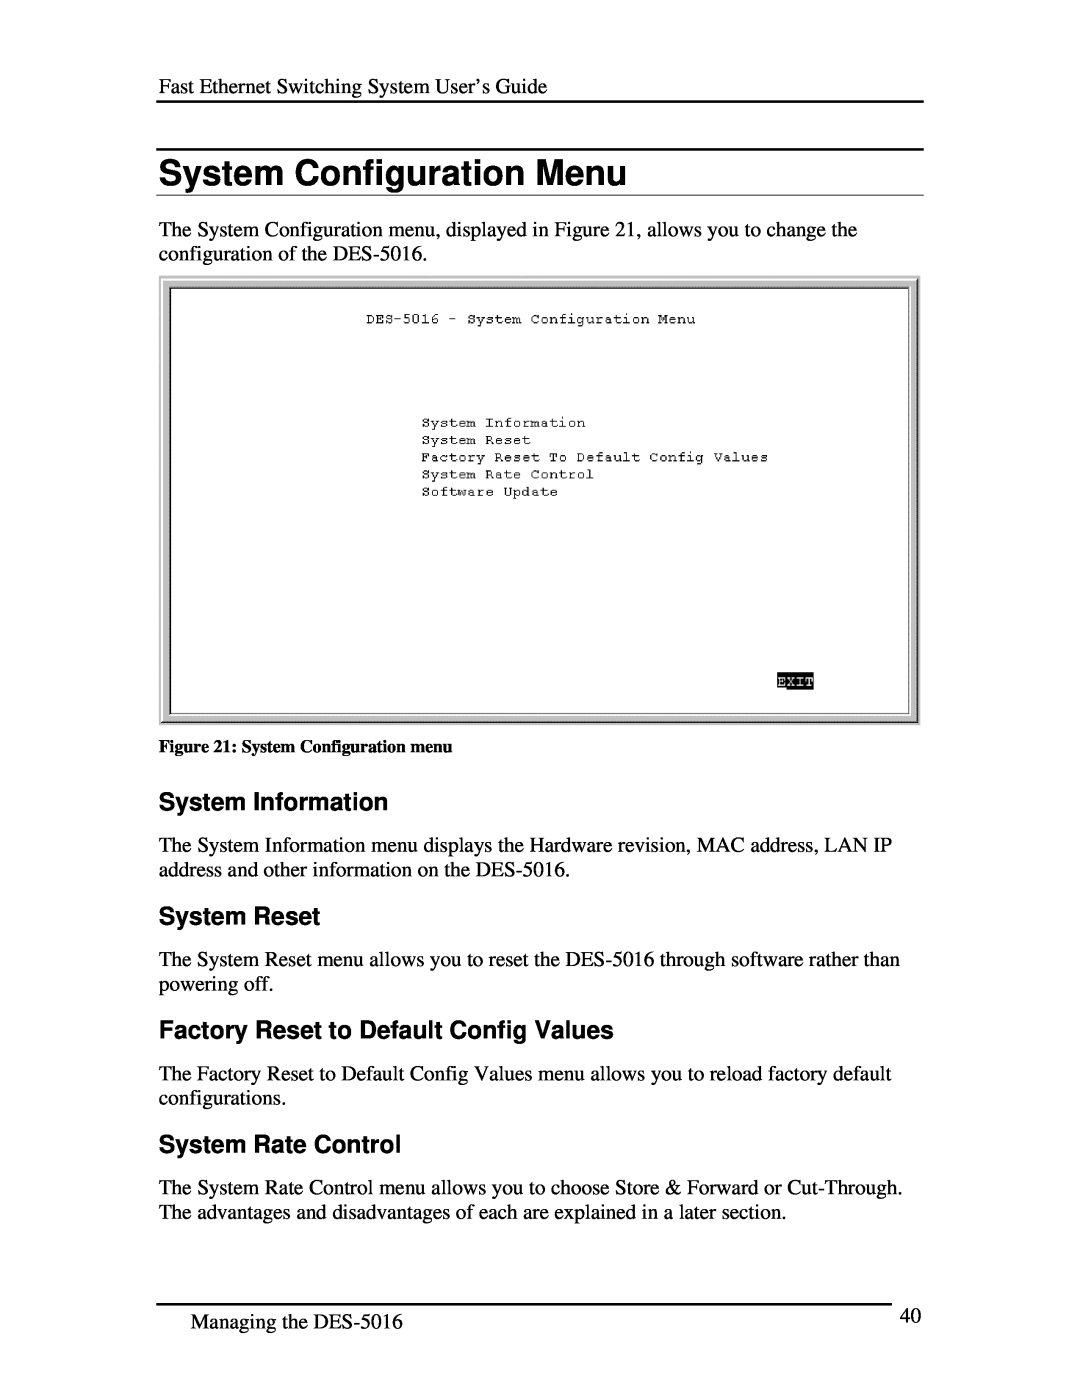 D-Link DES-5016 manual System Configuration Menu, System Information, System Reset, Factory Reset to Default Config Values 